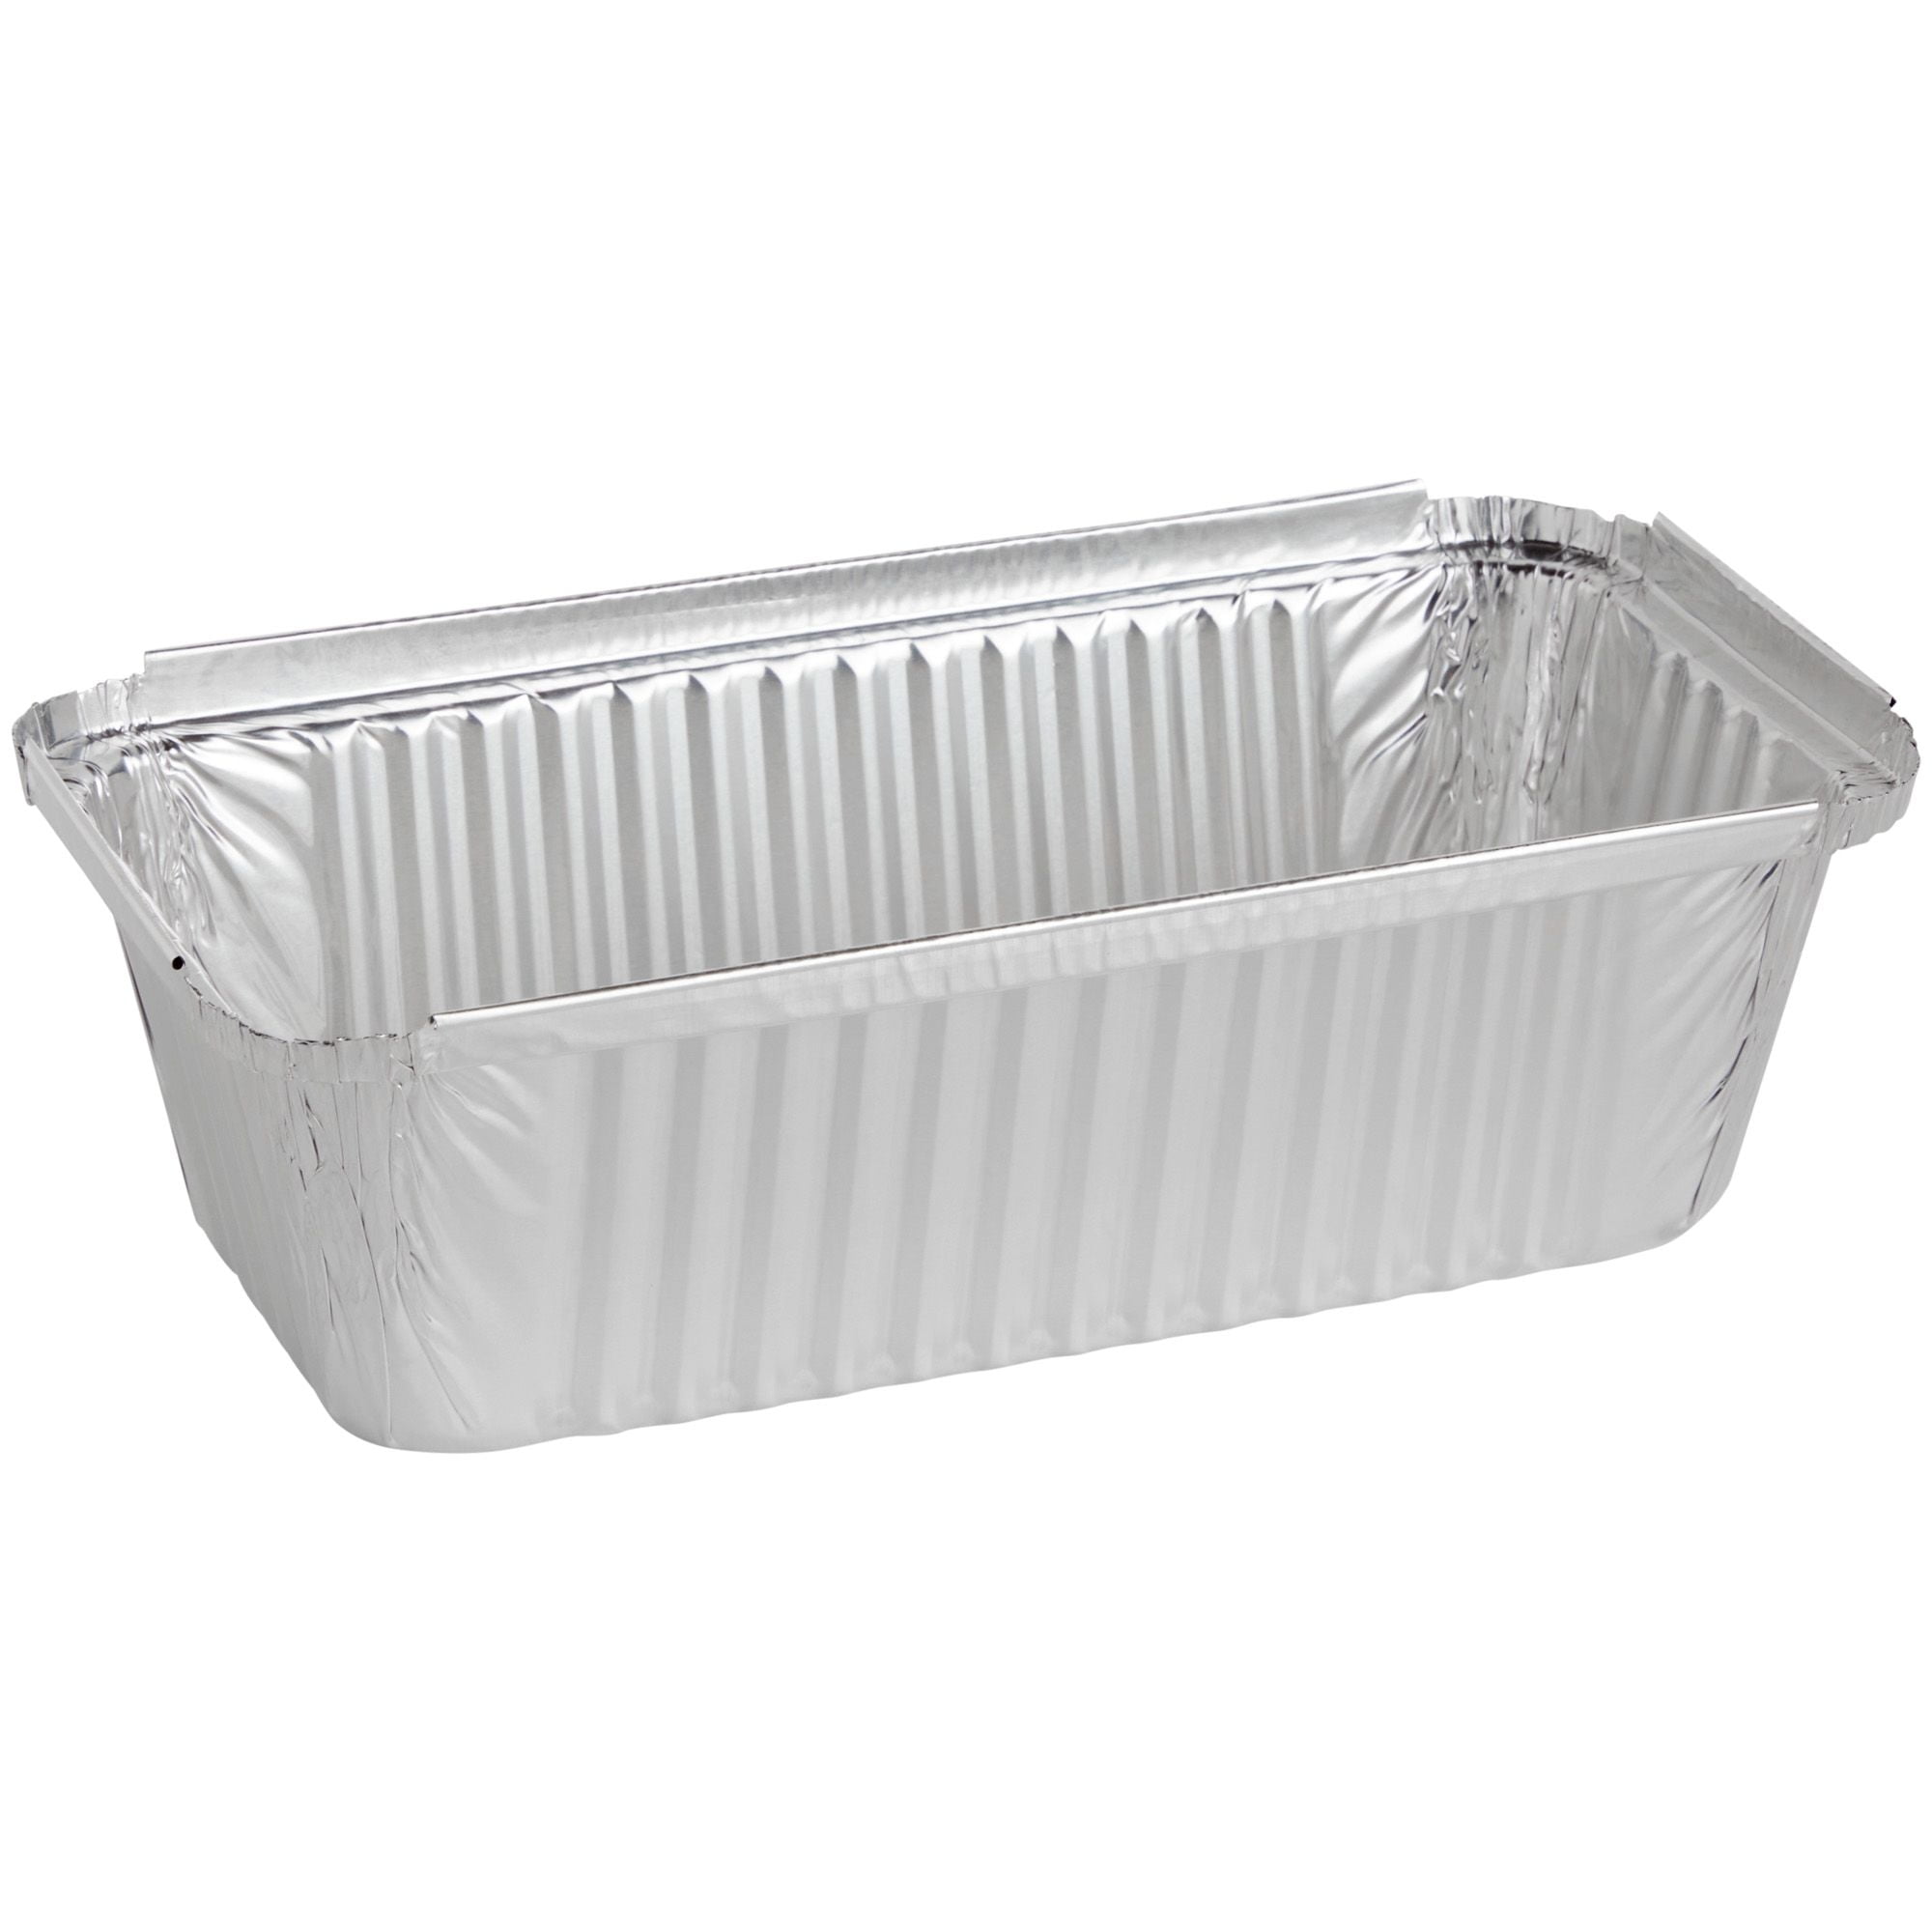 WANBAO 50 Pack Aluminum Pans Mini Loaf Pans Disposable Aluminum Foil 2lb  for Baking, Food Storage & Takeout, 8.5 X 4.5 X 2.5